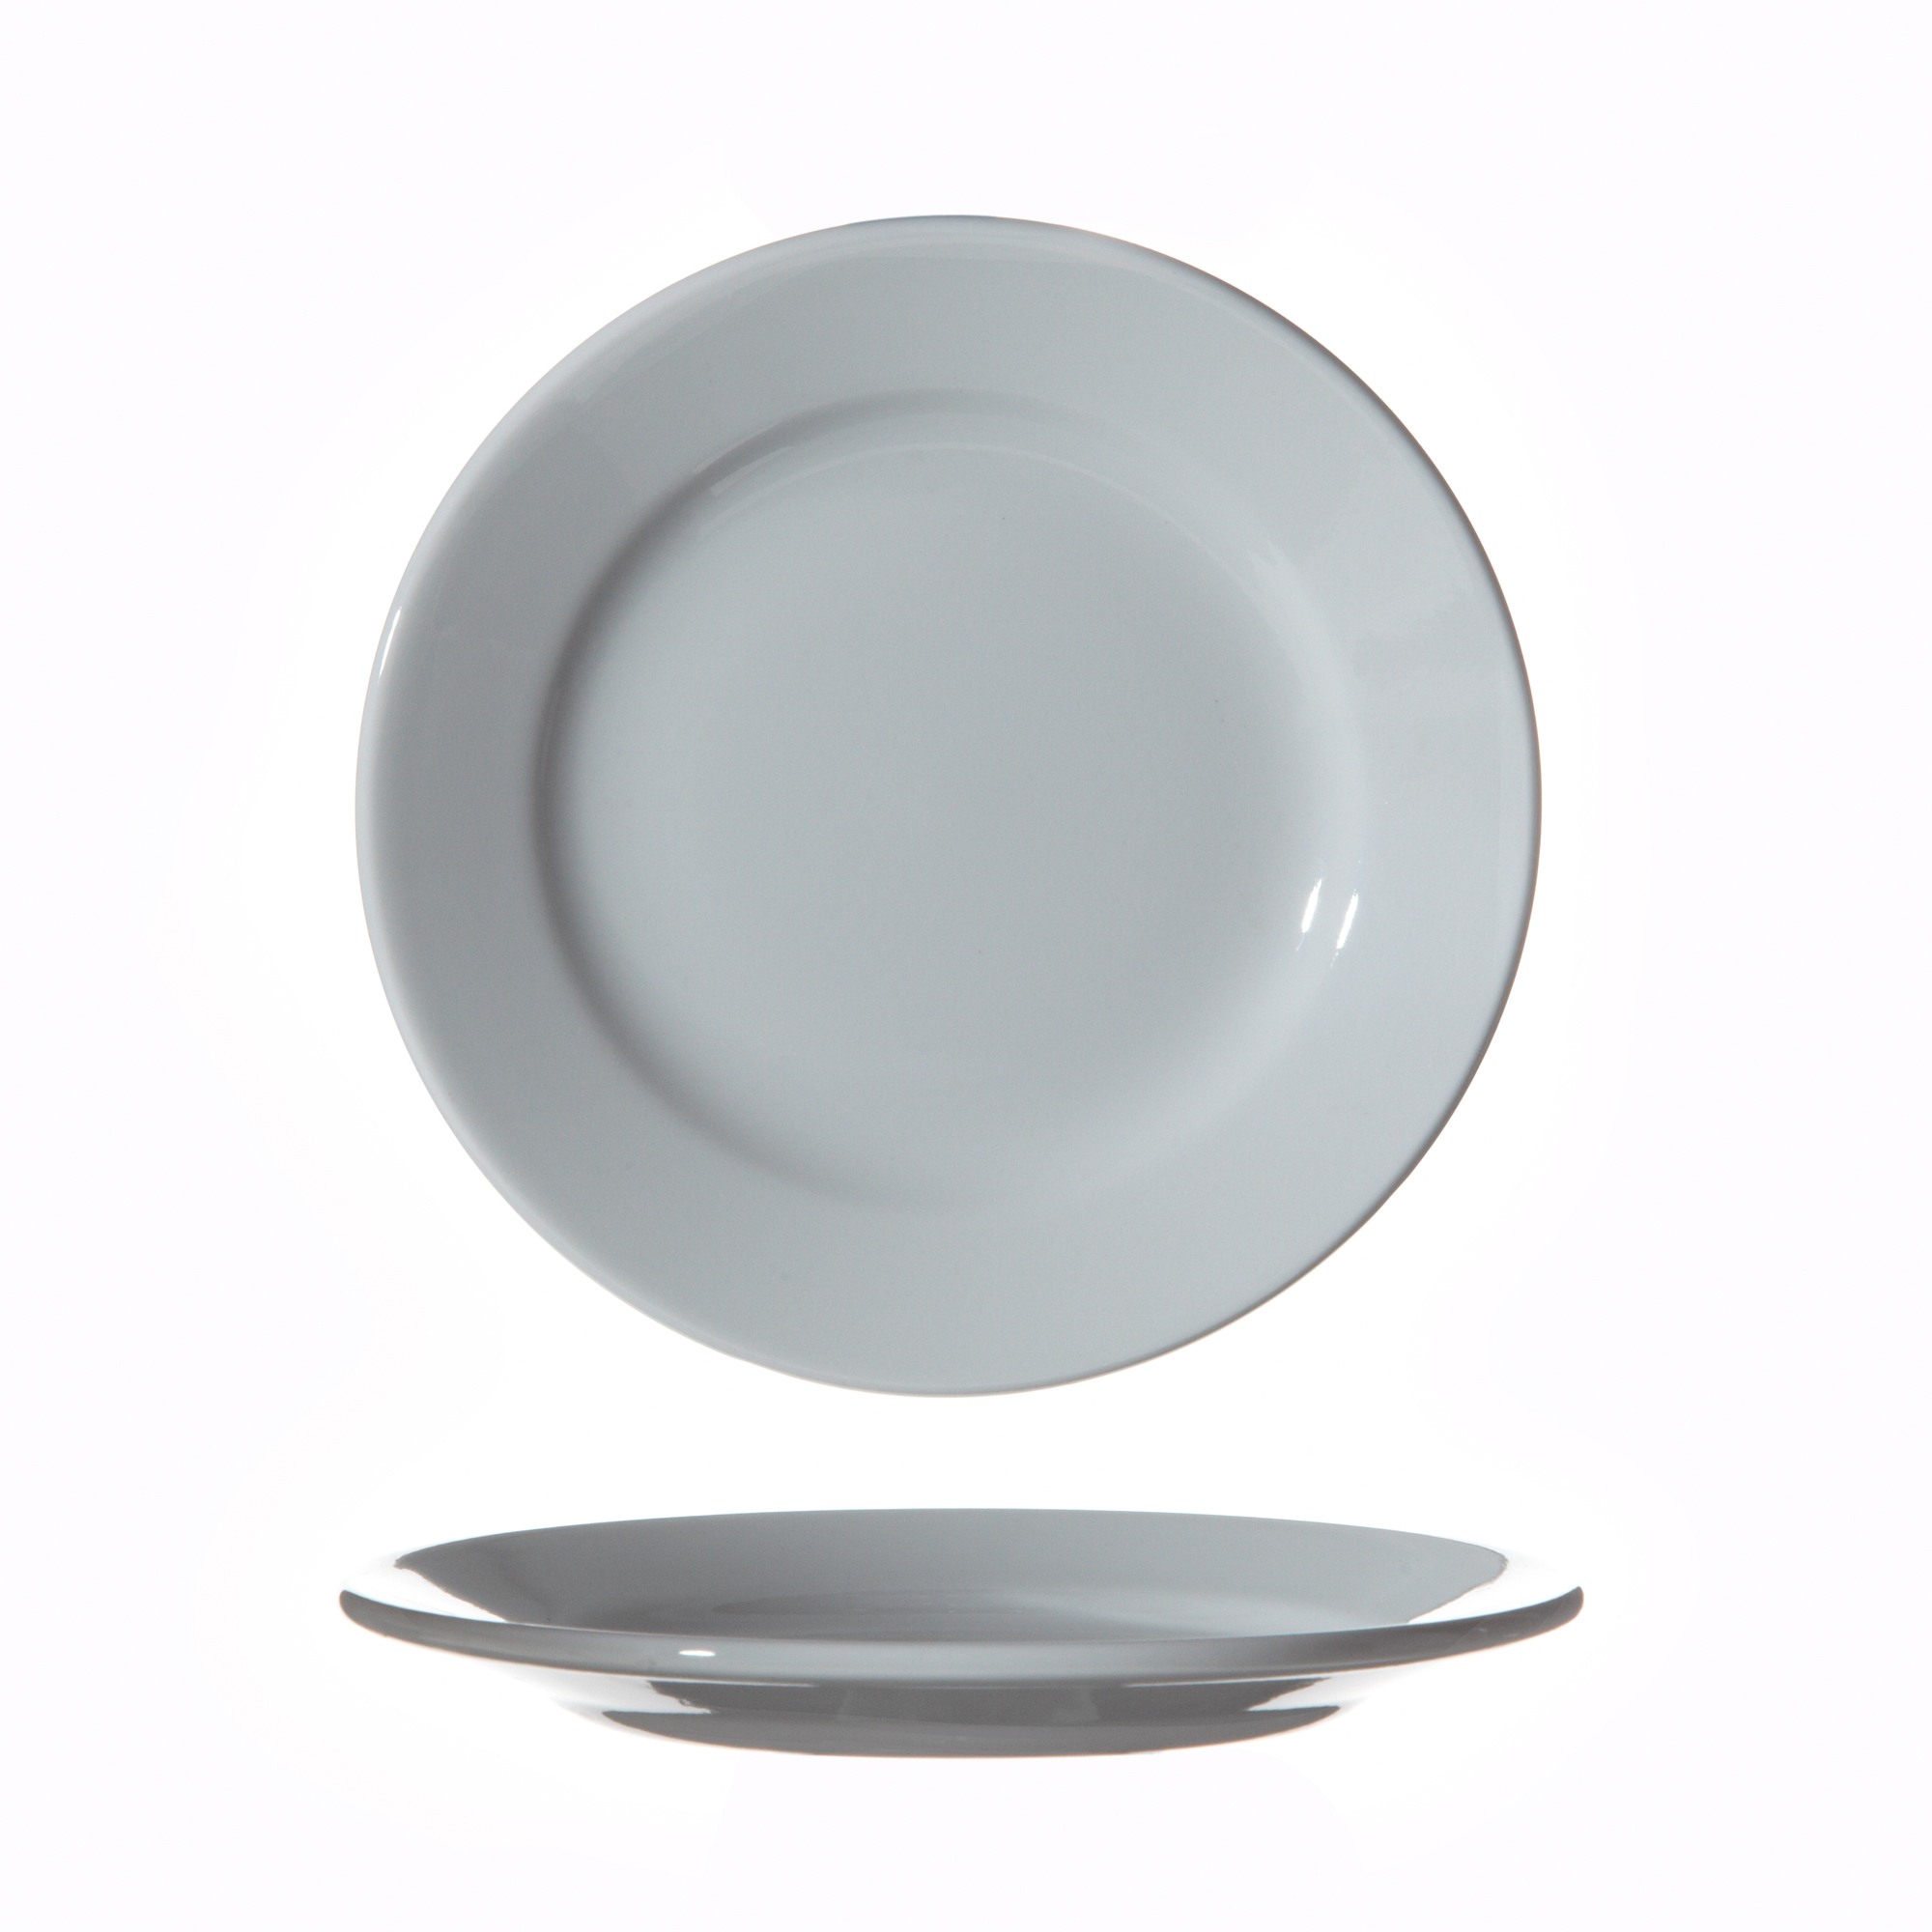 Assiette plate Bourrelet n°10 en porcelaine diam 136 mm - Réf. 591010 - Illustration n°1